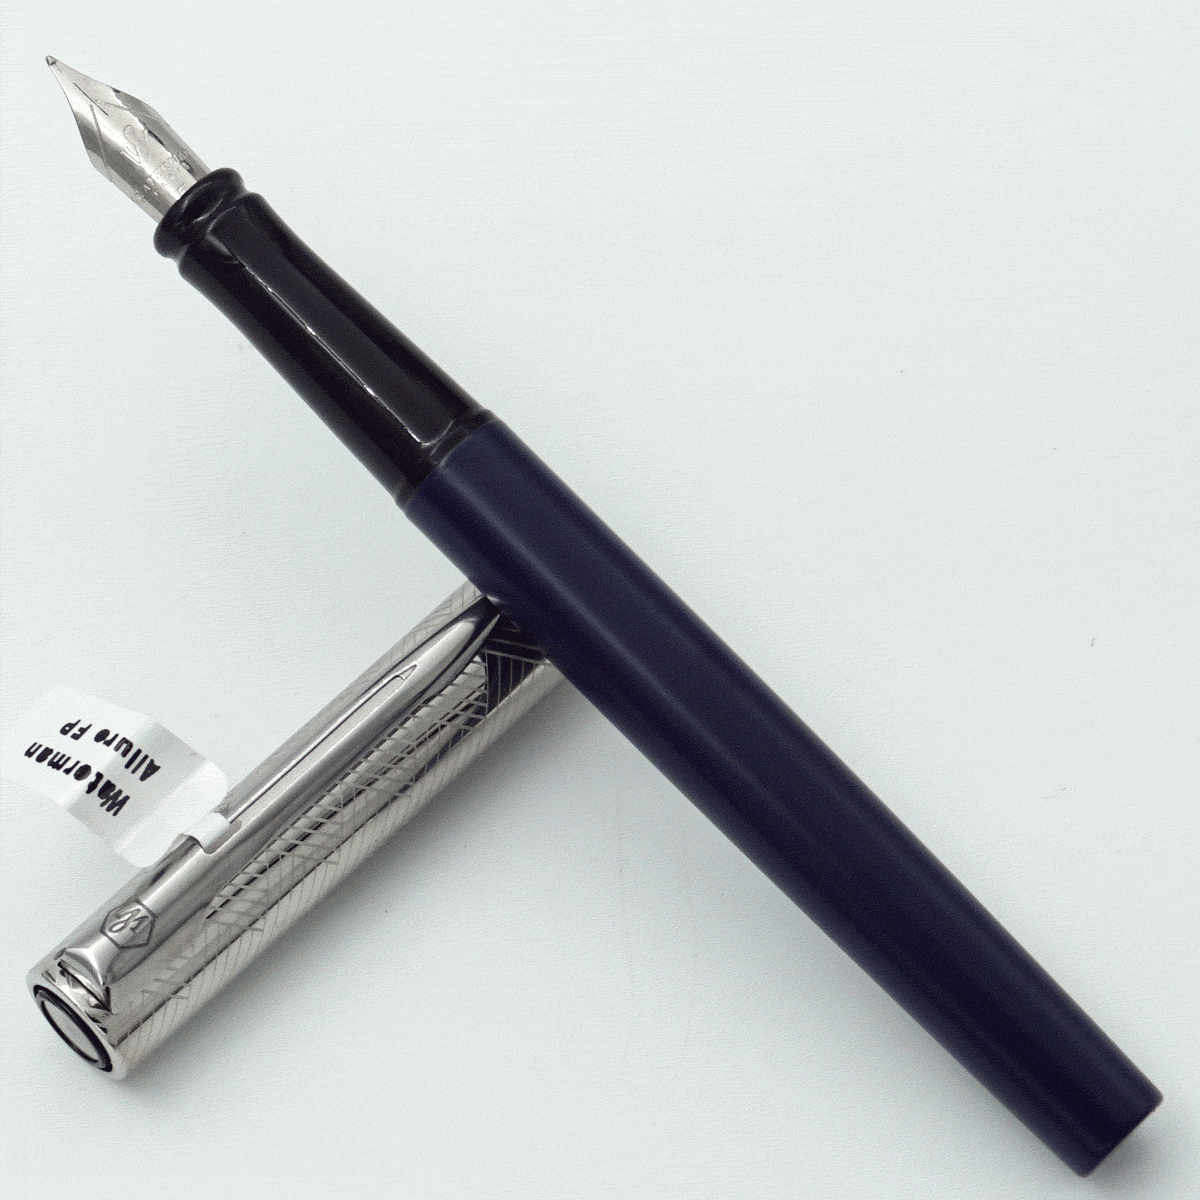 Waterman Allure Deluxe Blue Color Body With Chrome Cap And Silver Clip Fine Nib Converter Type Fountain Pen SKU 24492